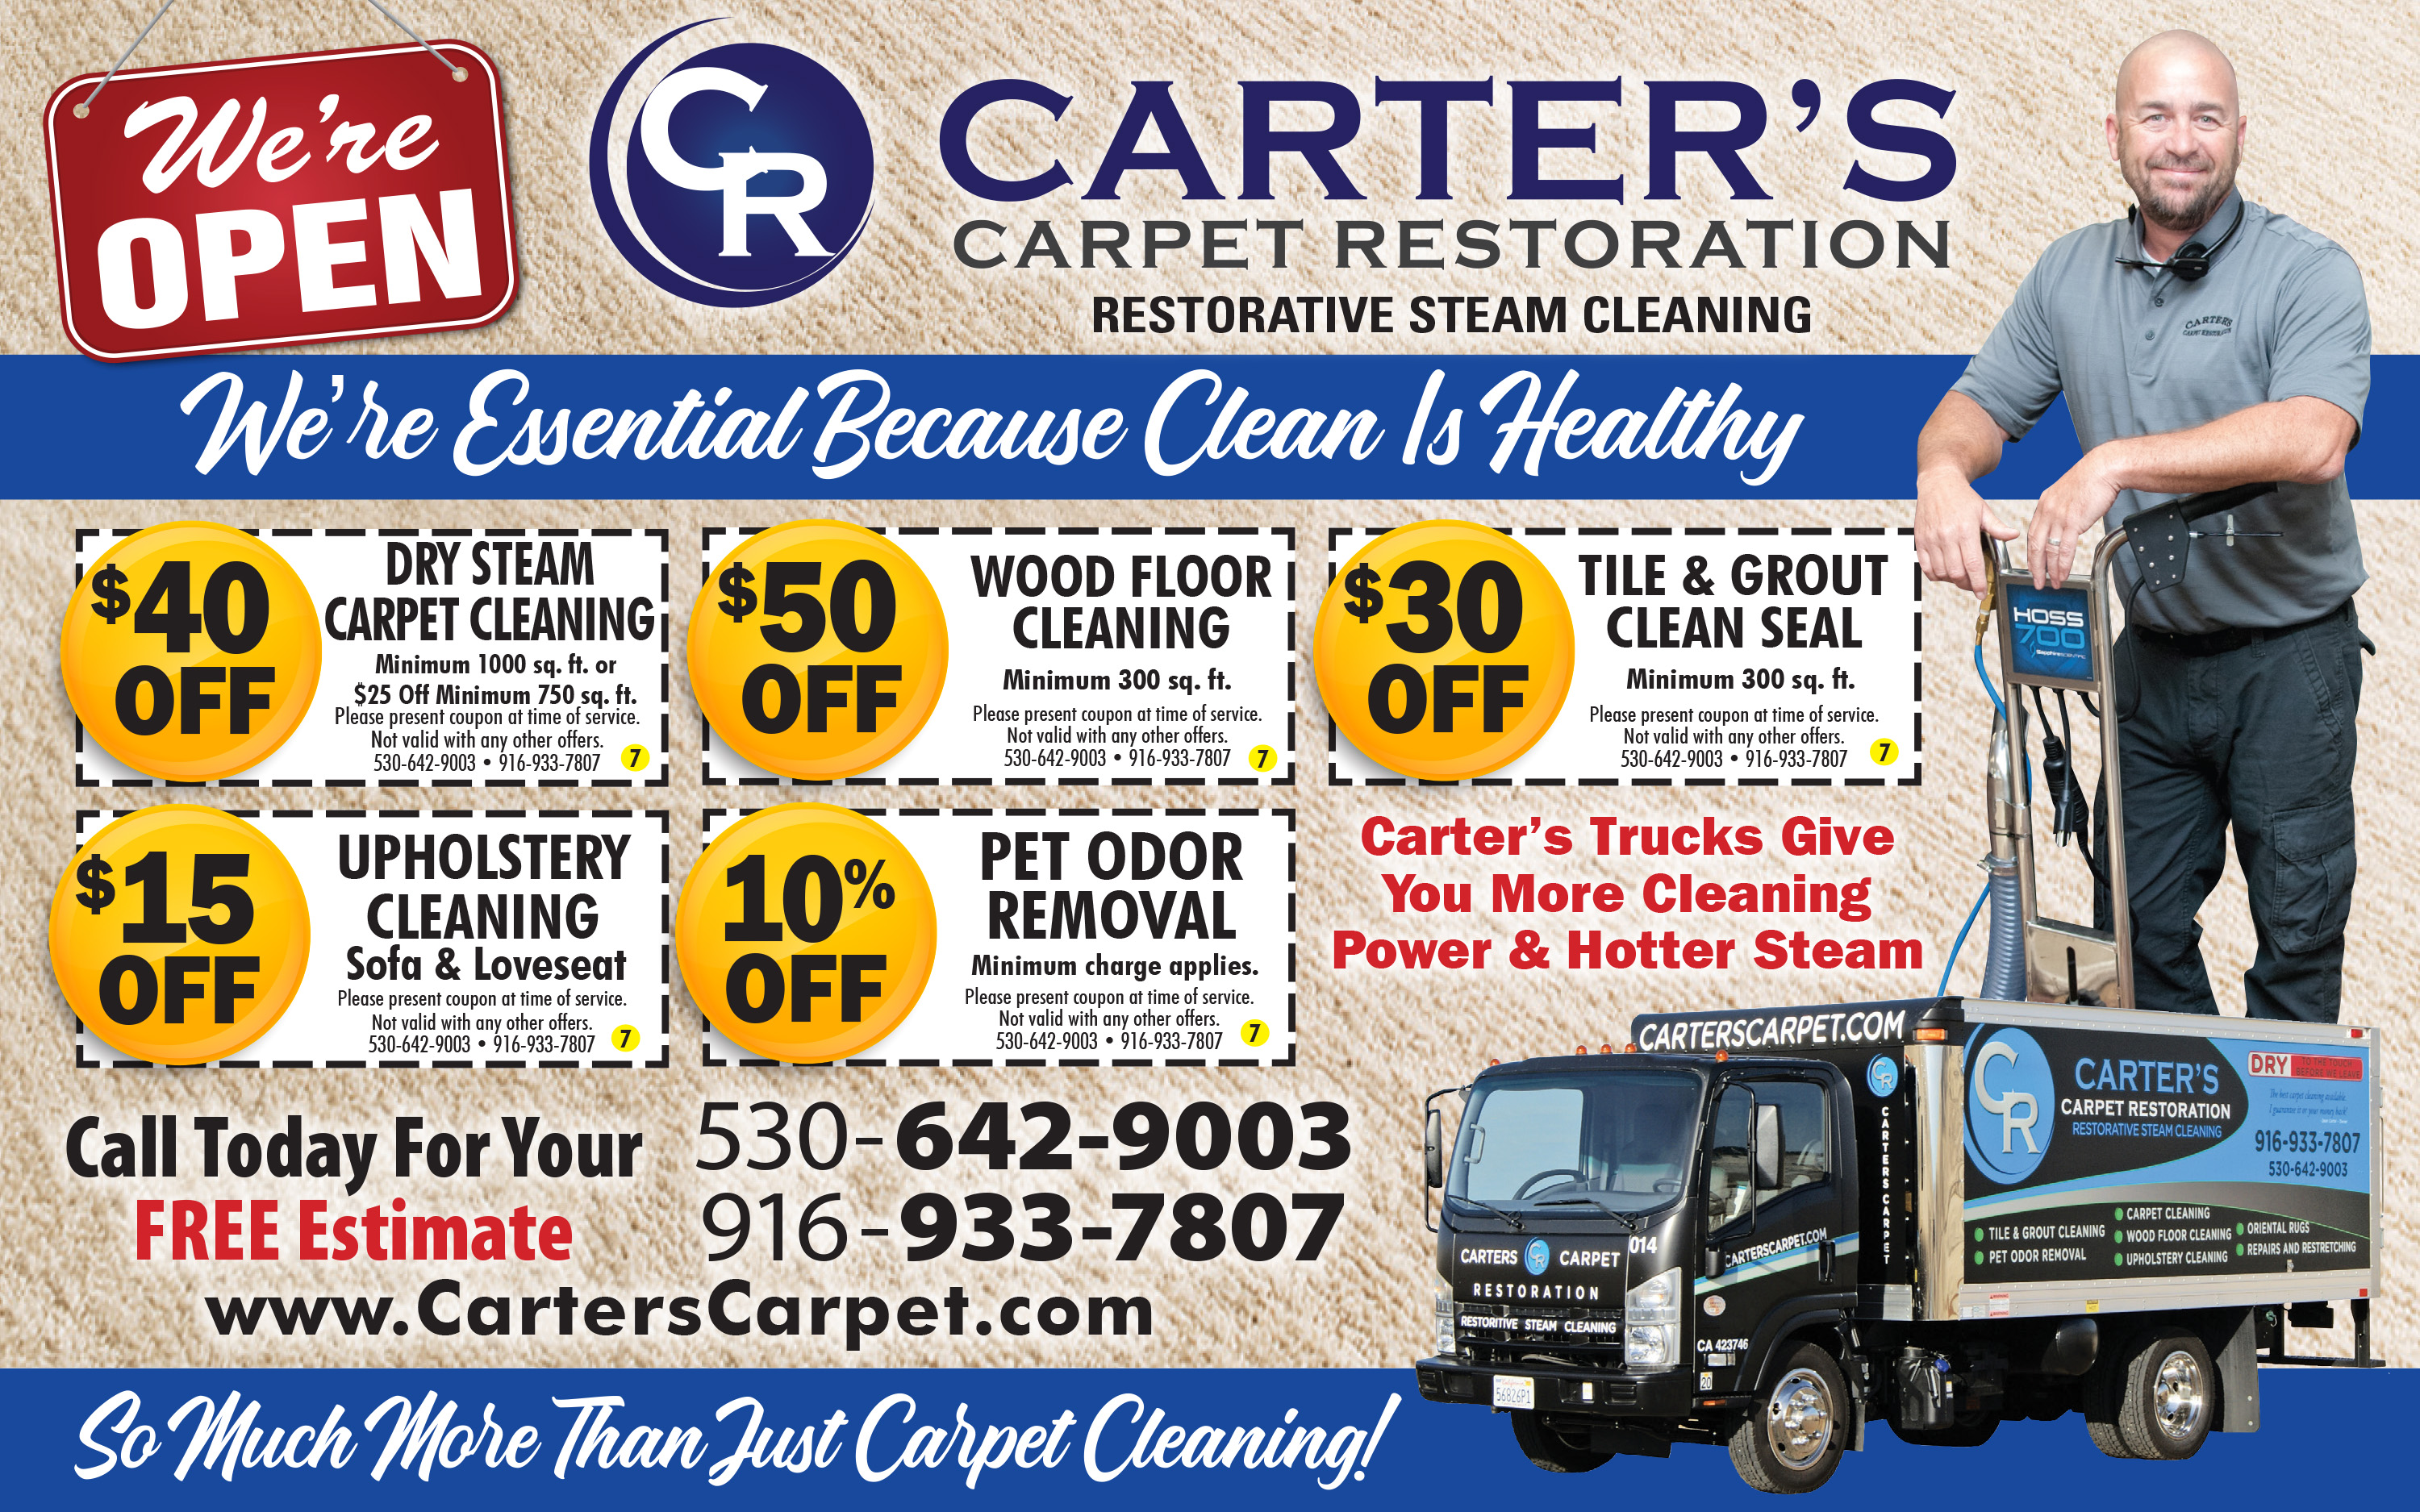 Carter's Carpet Restoration—Carpet Cleaning in El Dorado Hills—Style Savings Guide June 2020